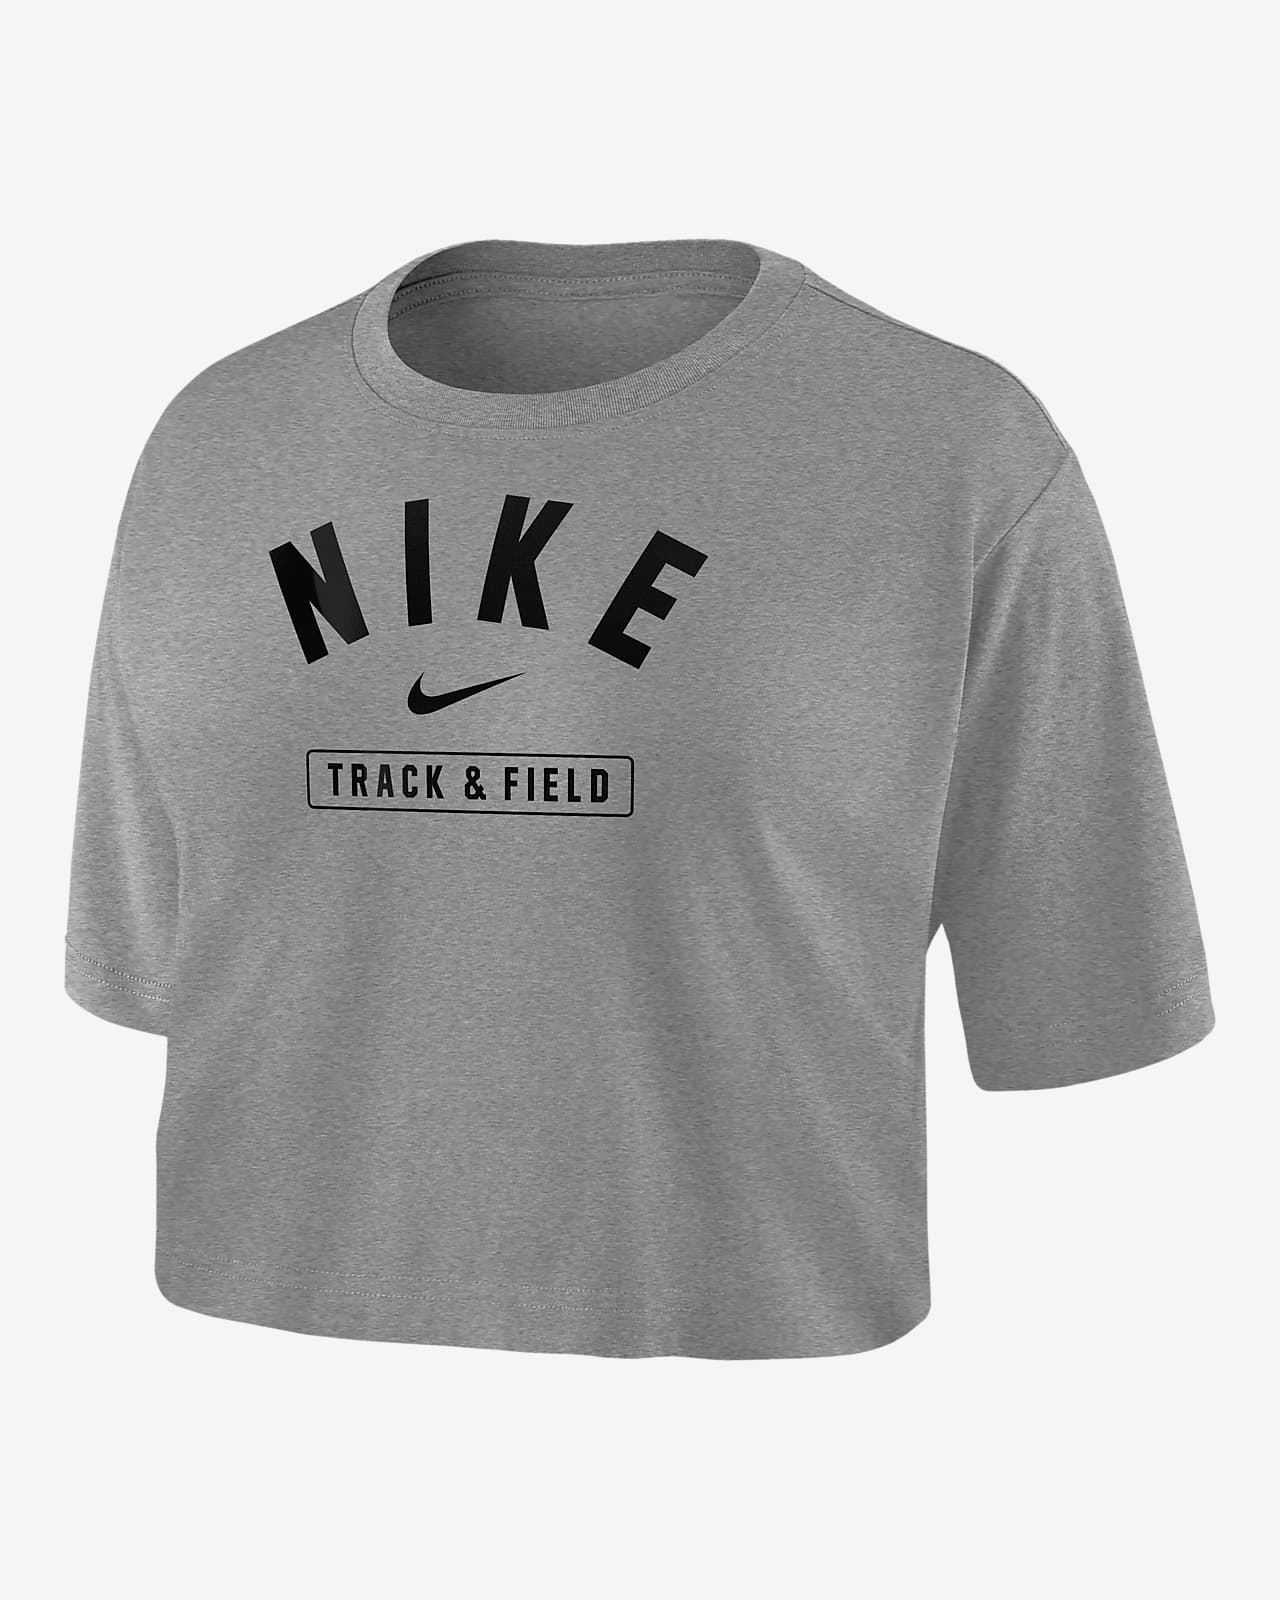 Nike Women's Dri-FIT Cropped Track & Field T-Shirt